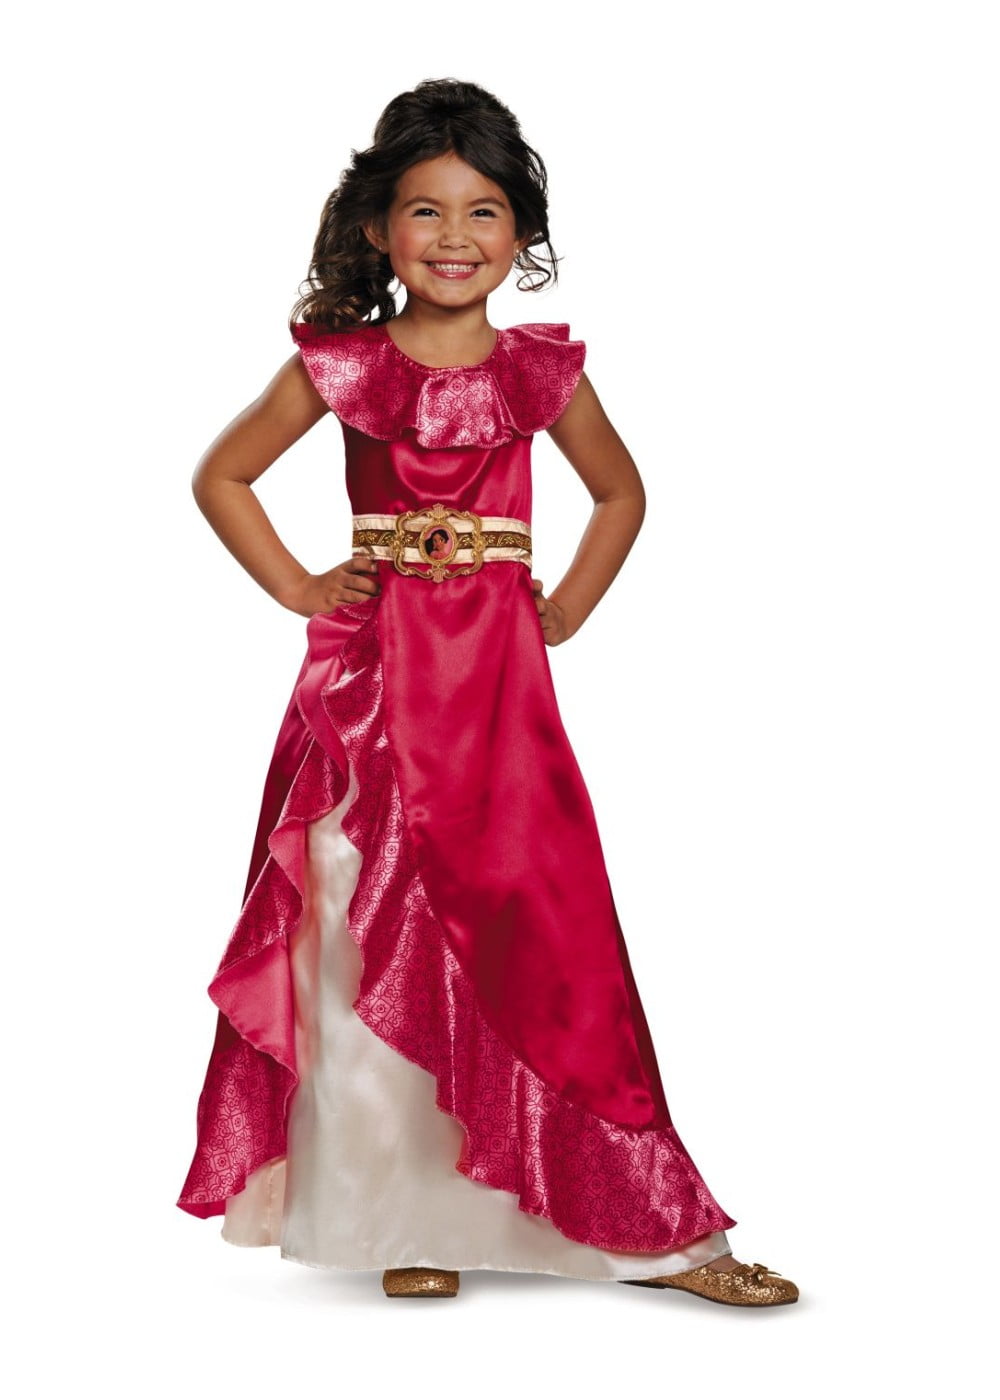 Child's Girls Disney Princess Elena Of Avalor Ball Gown Dress Costume 